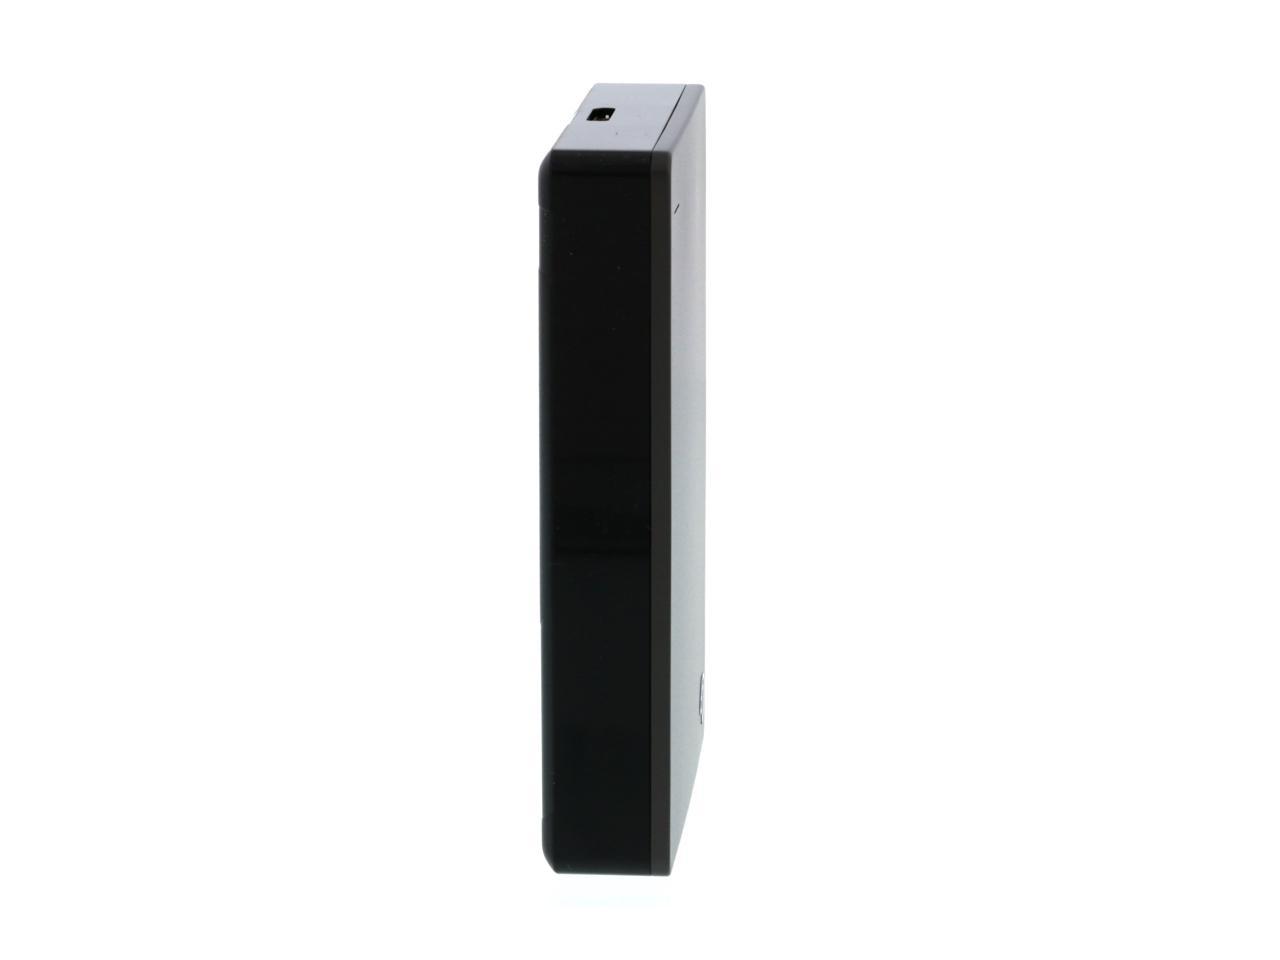 Seagate Backup Plus 5TB USB 3.0 External Hard Drive - Newegg.com